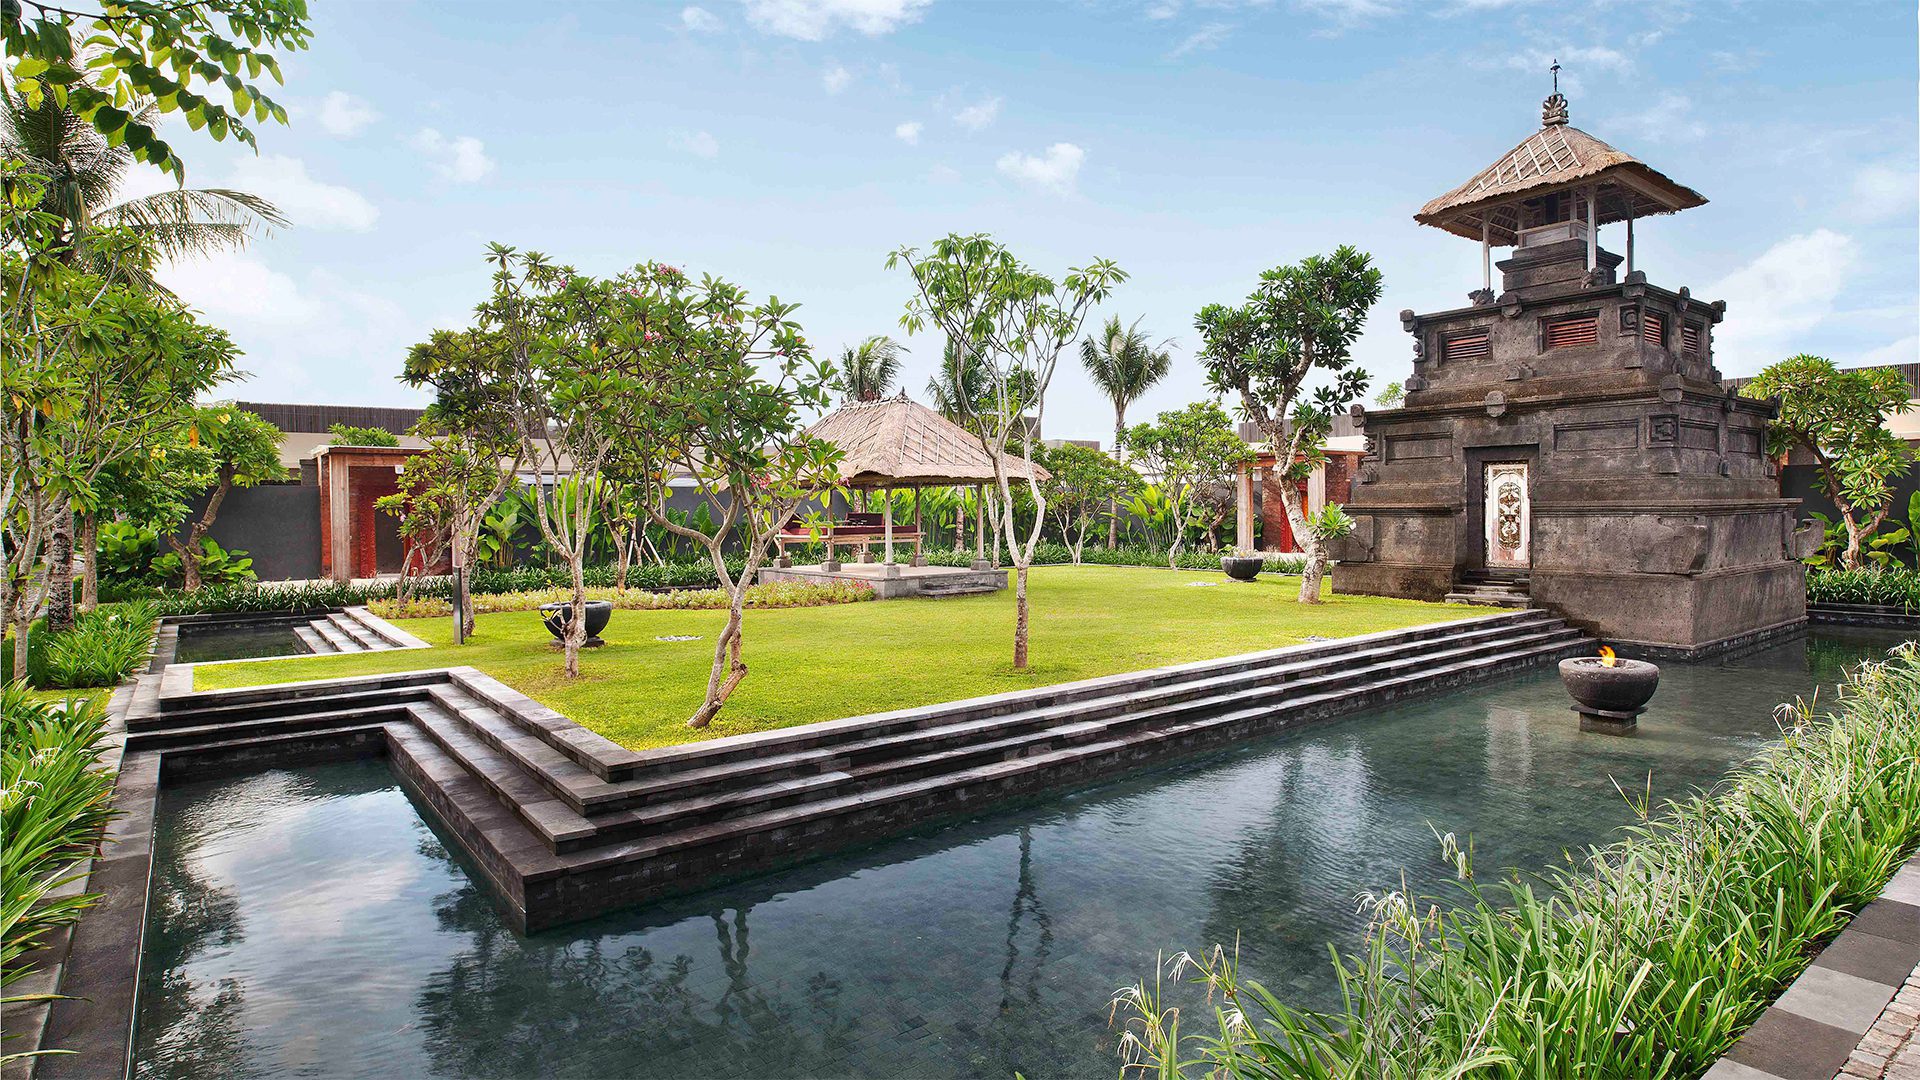 Seeking The ‘Muses’ Of Bali